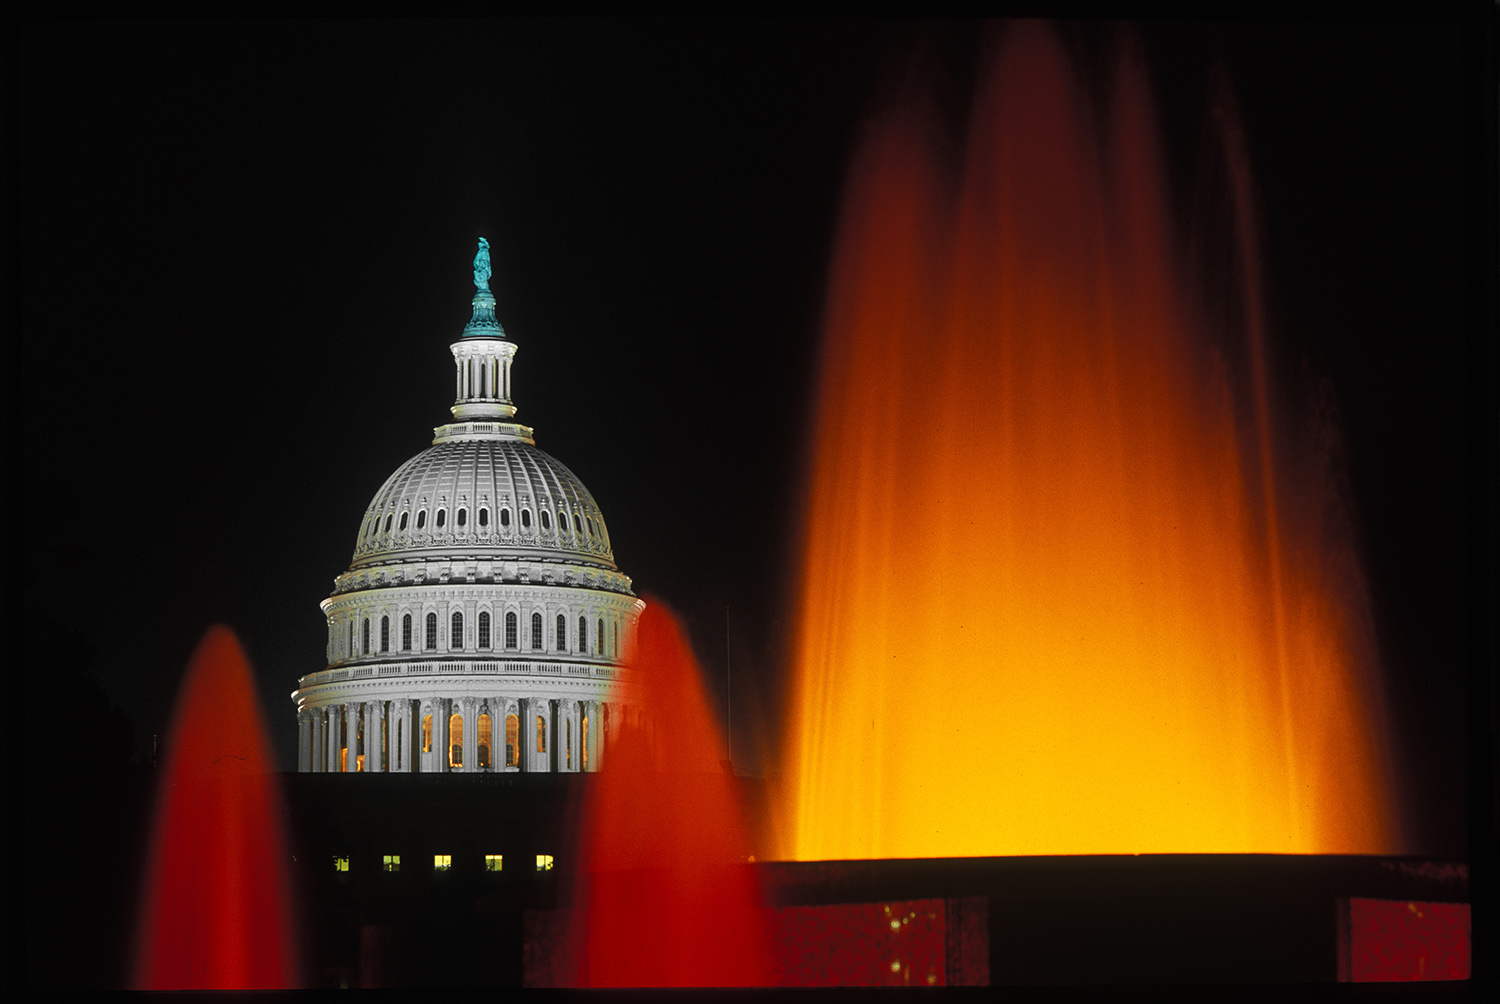 US_Capitol_Dome_Night_Orange_Fountain_Freedom_Statue_Washington_DC.jpg